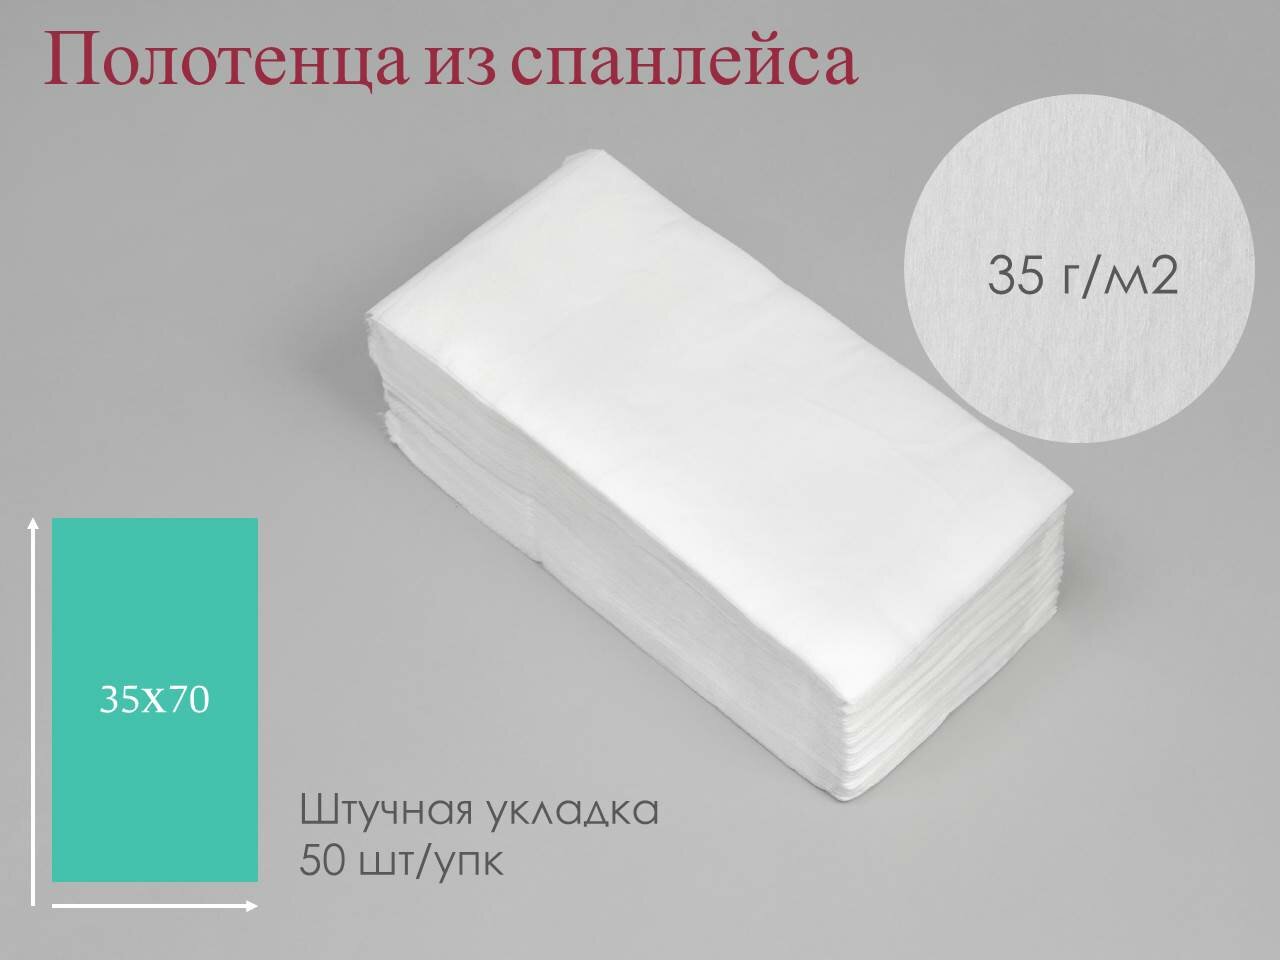 Одноразовые полотенца Чистовье из спанлейса 35х70 см, 50 штук